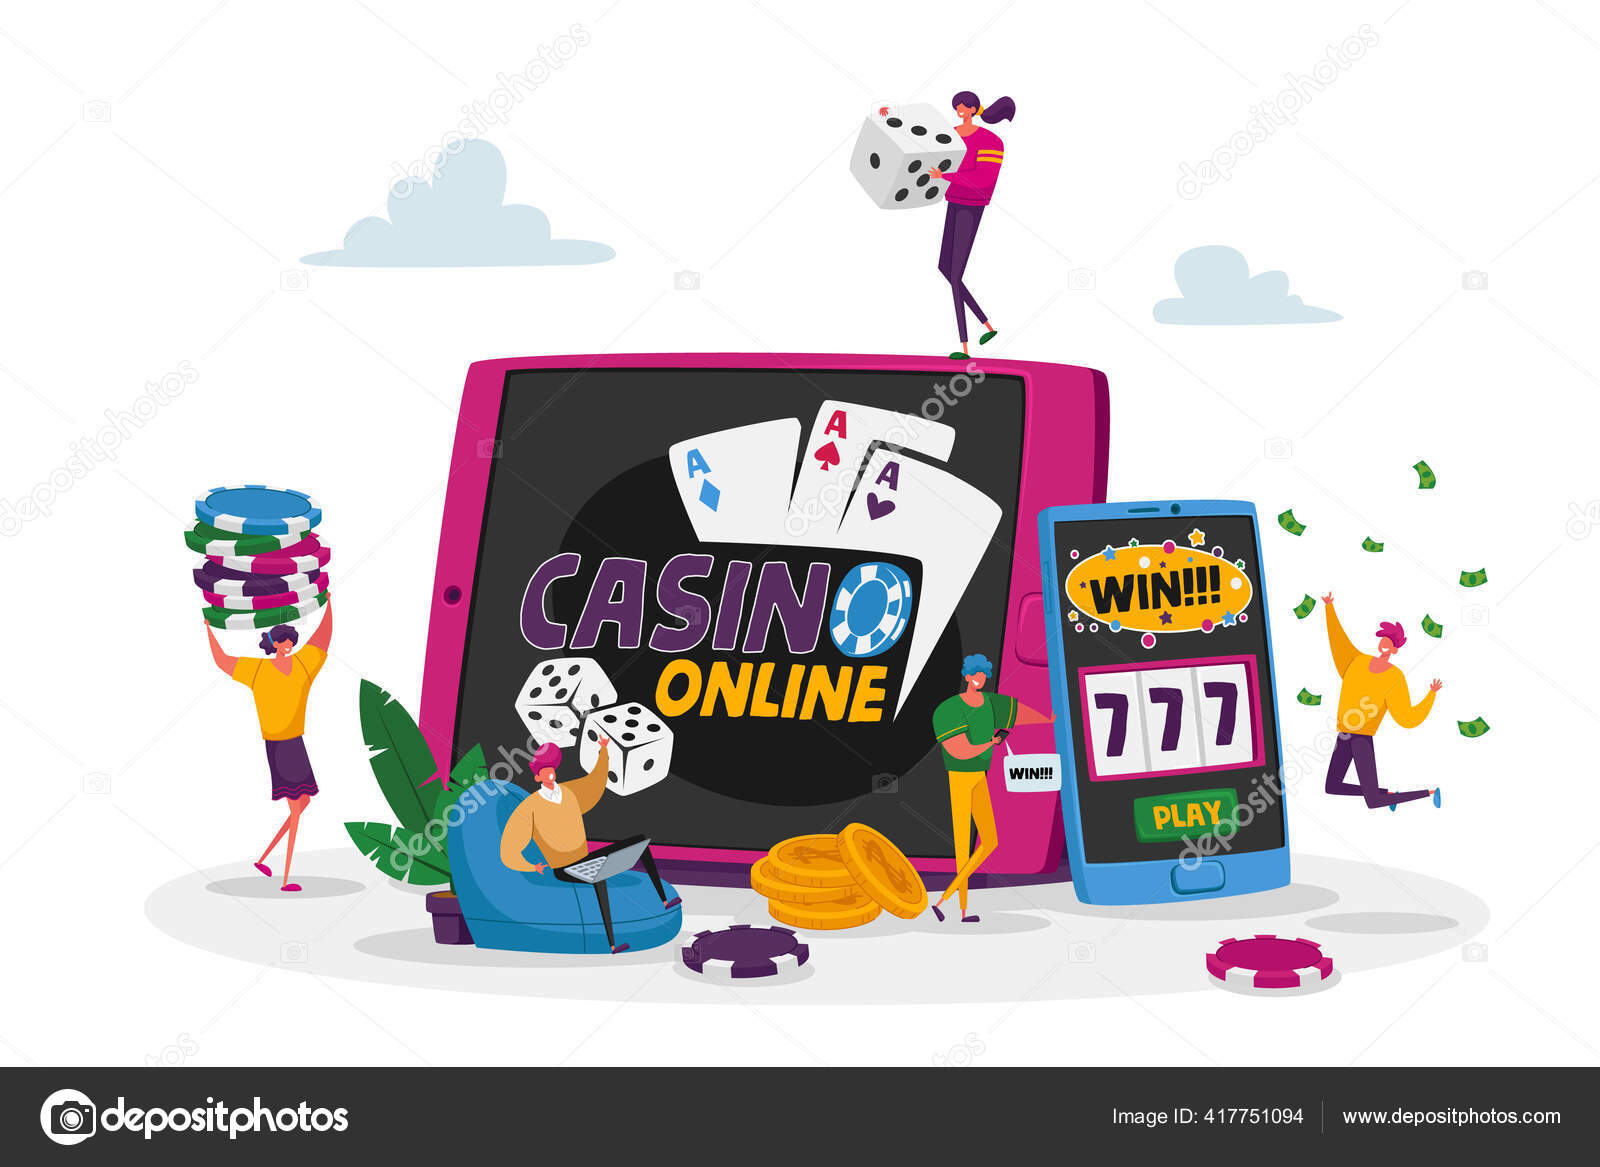 Who Else Wants To Be Successful With казино онлайн